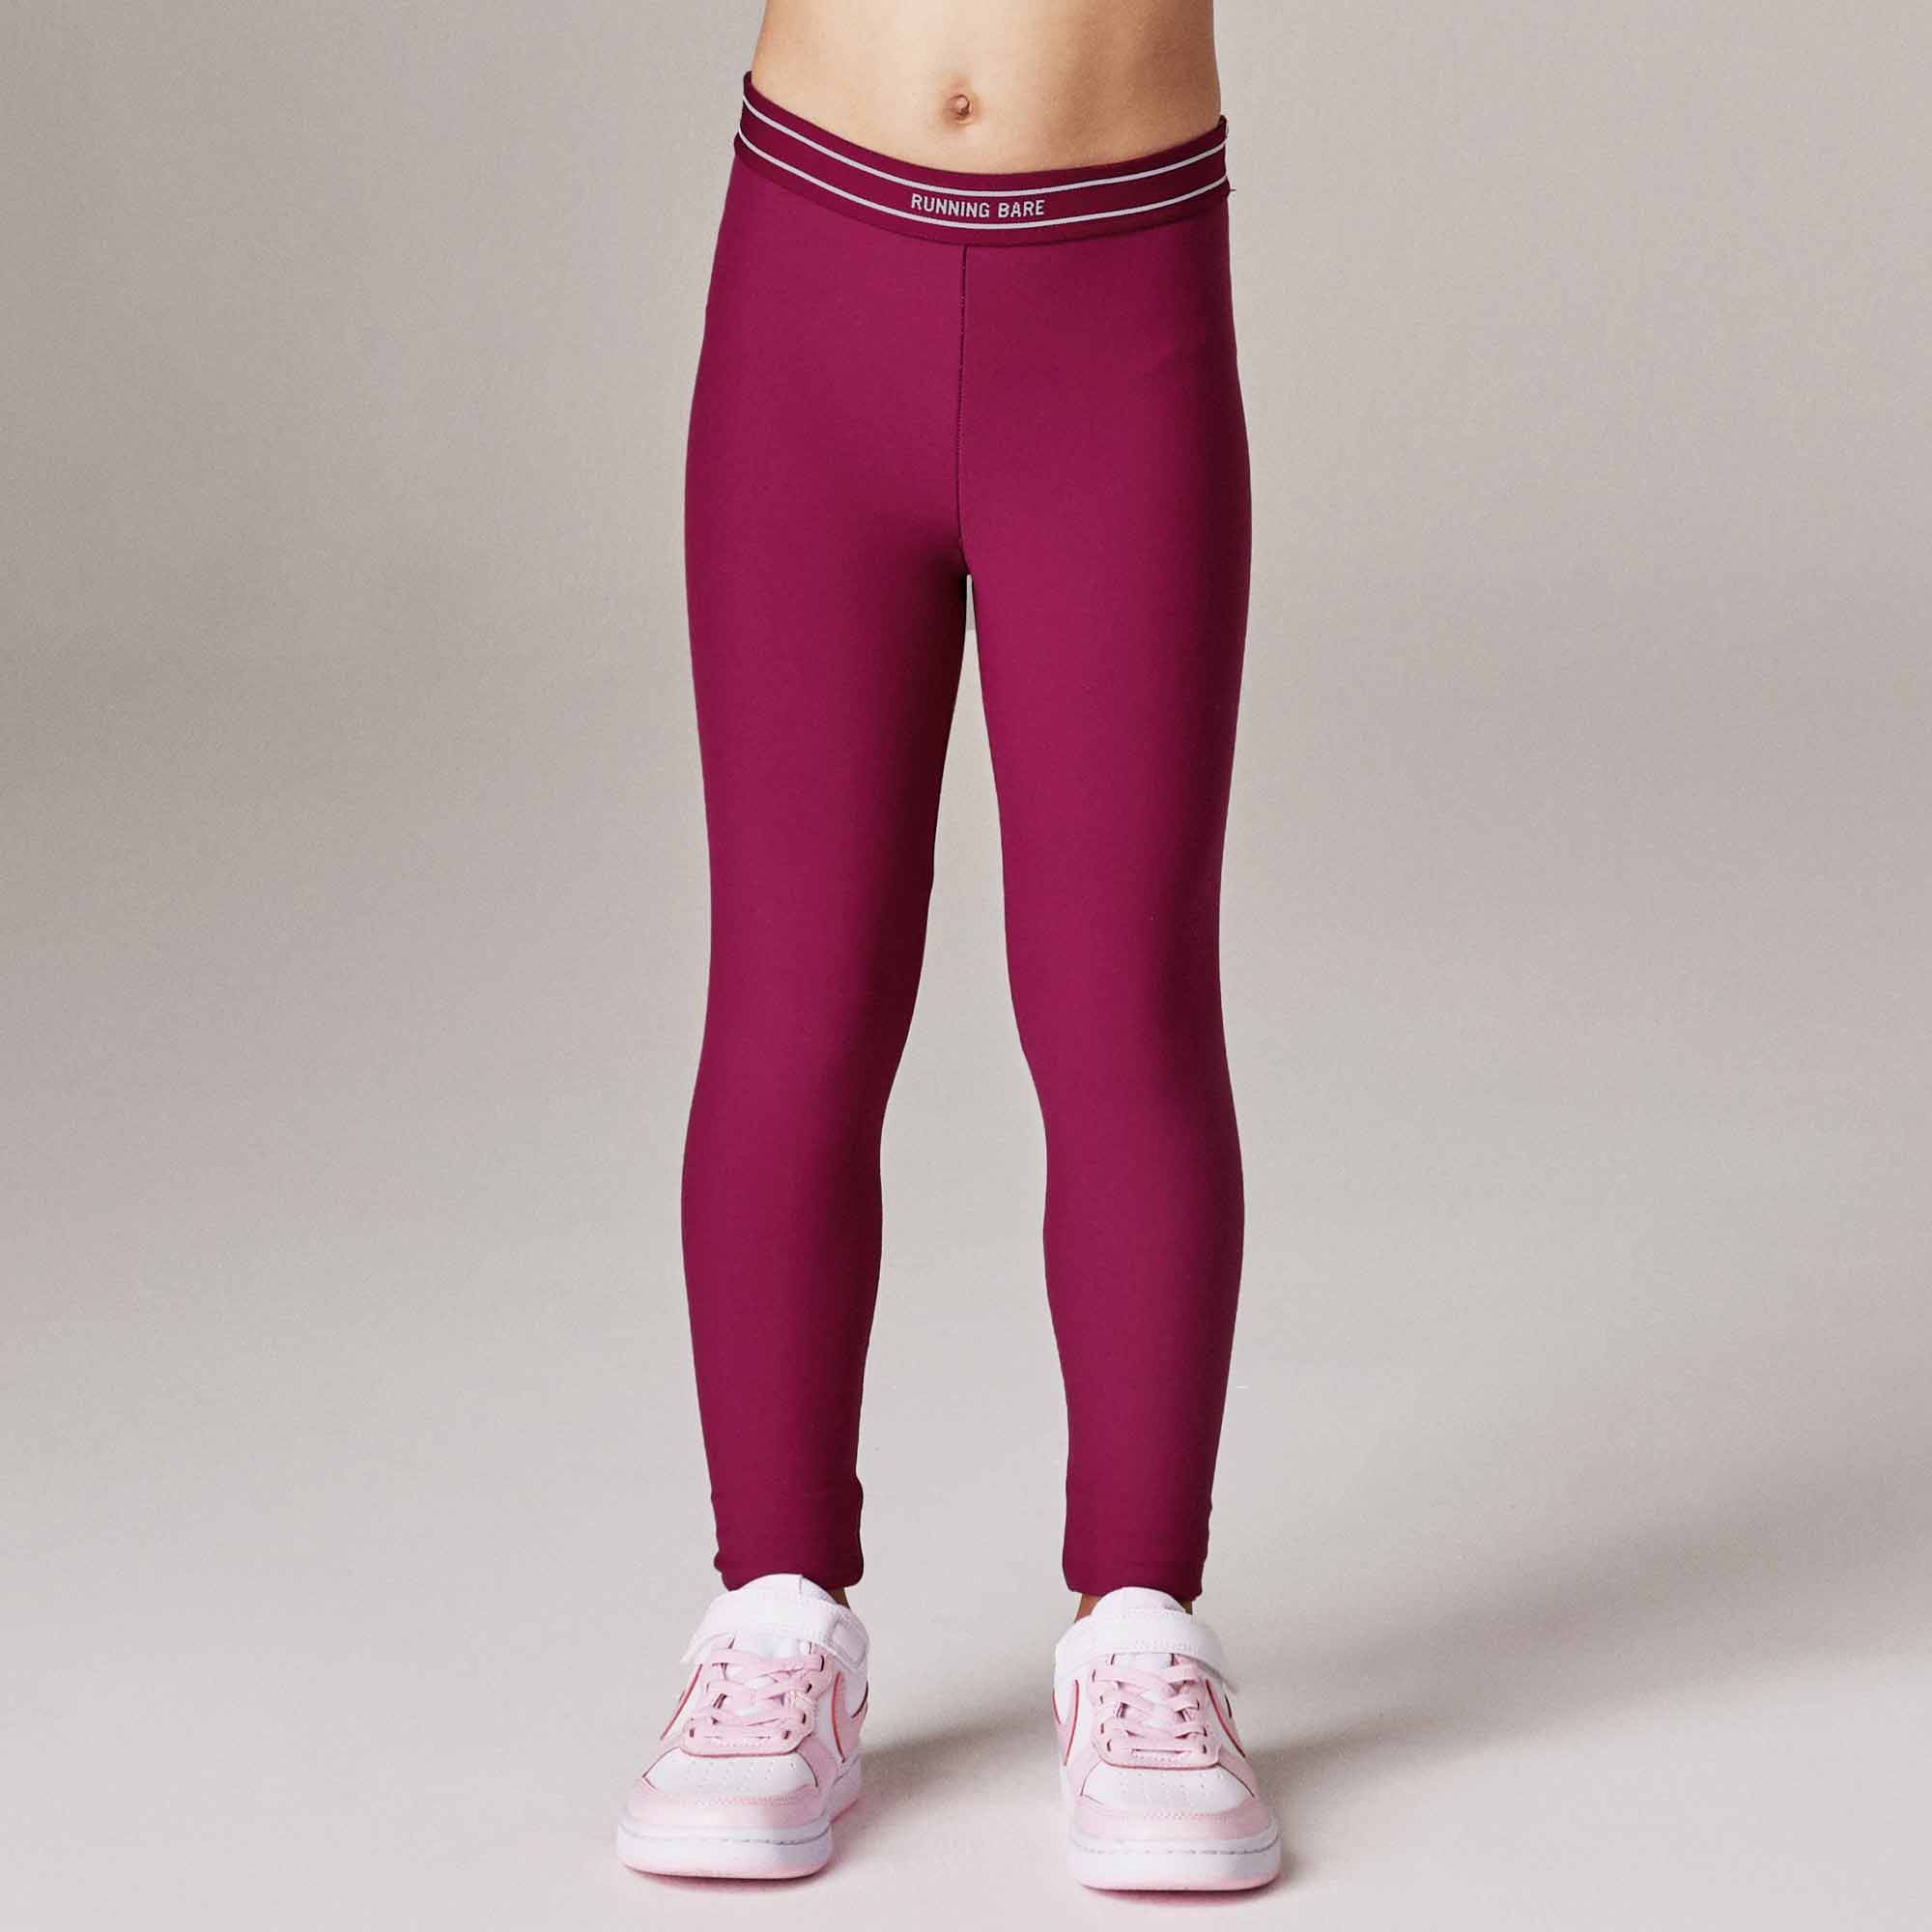 Leggings,Sport Gym Fitness 7/8 Length Leggings Women Bare Matte Soft  Workout Training Yoga Pants Tights 6 GrapePurple